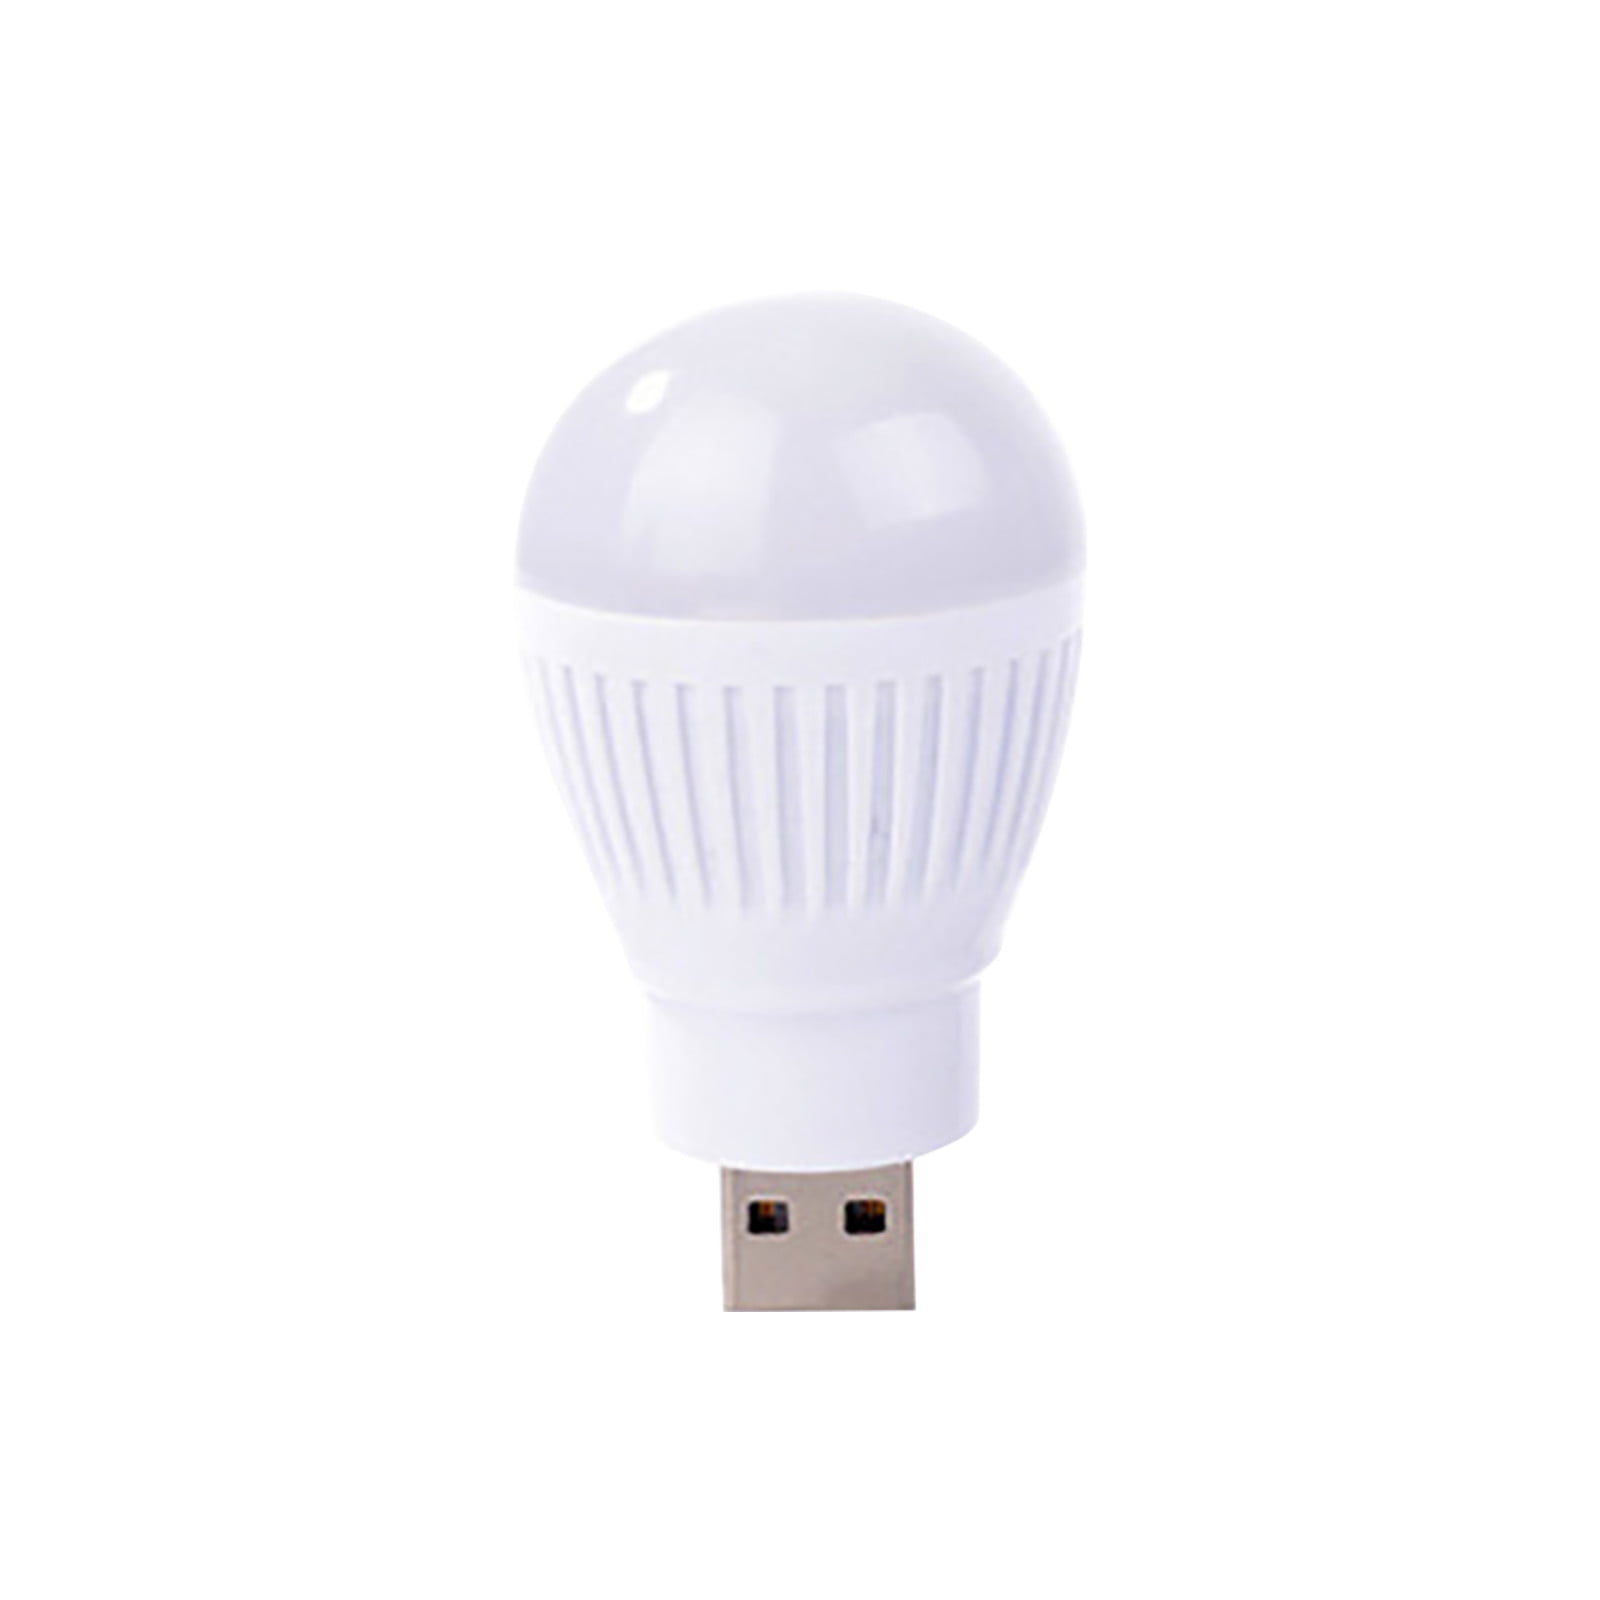 PORTABLE 5W ENERGY SAVING USB LED NIGHT TENT LIGHT CAMPING LAMP BULB W/HOOK FIRM 